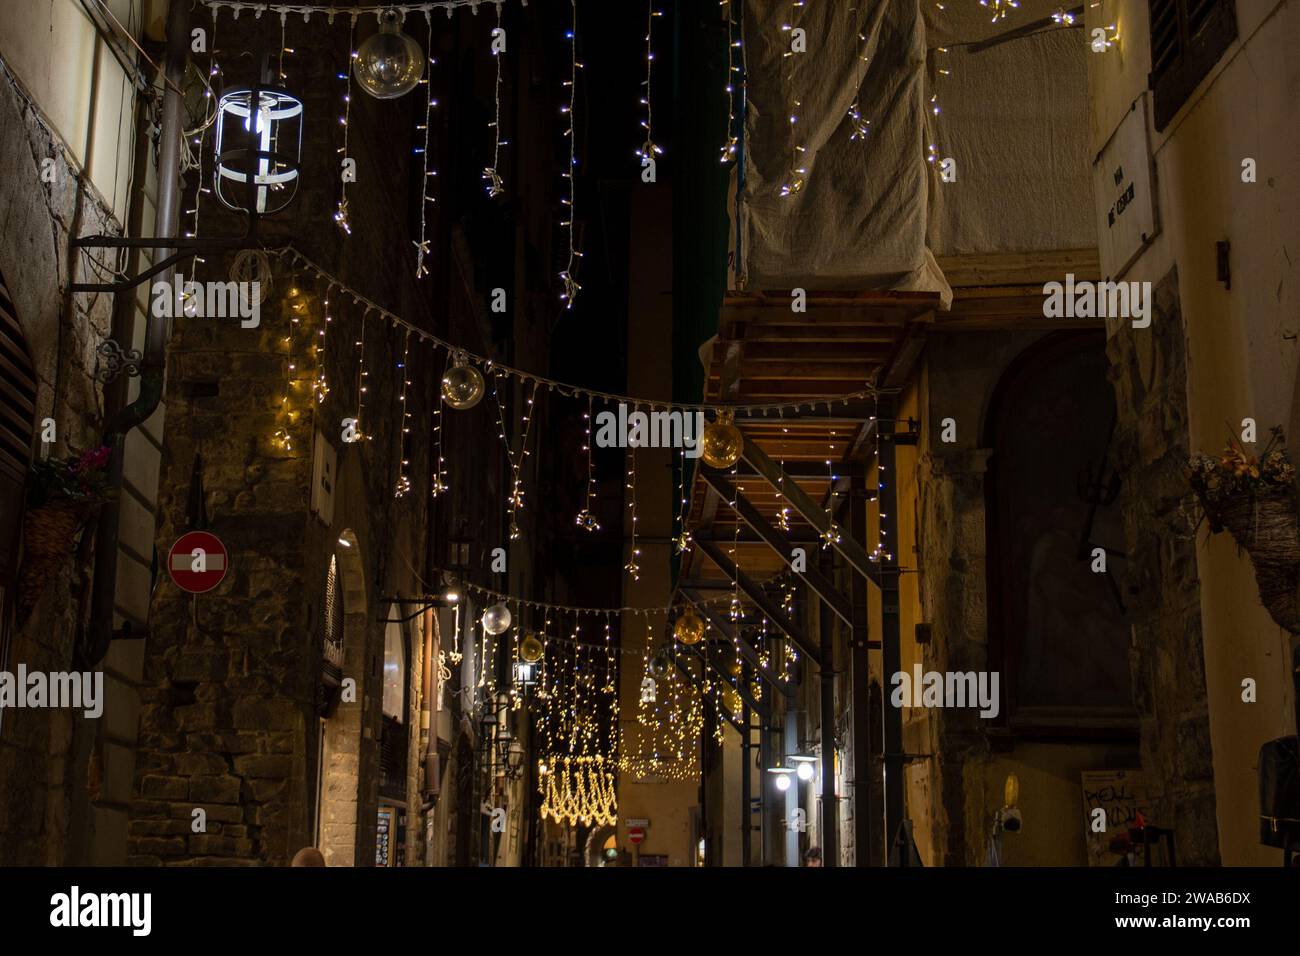 Street in the urban center with illuminations Stock Photo